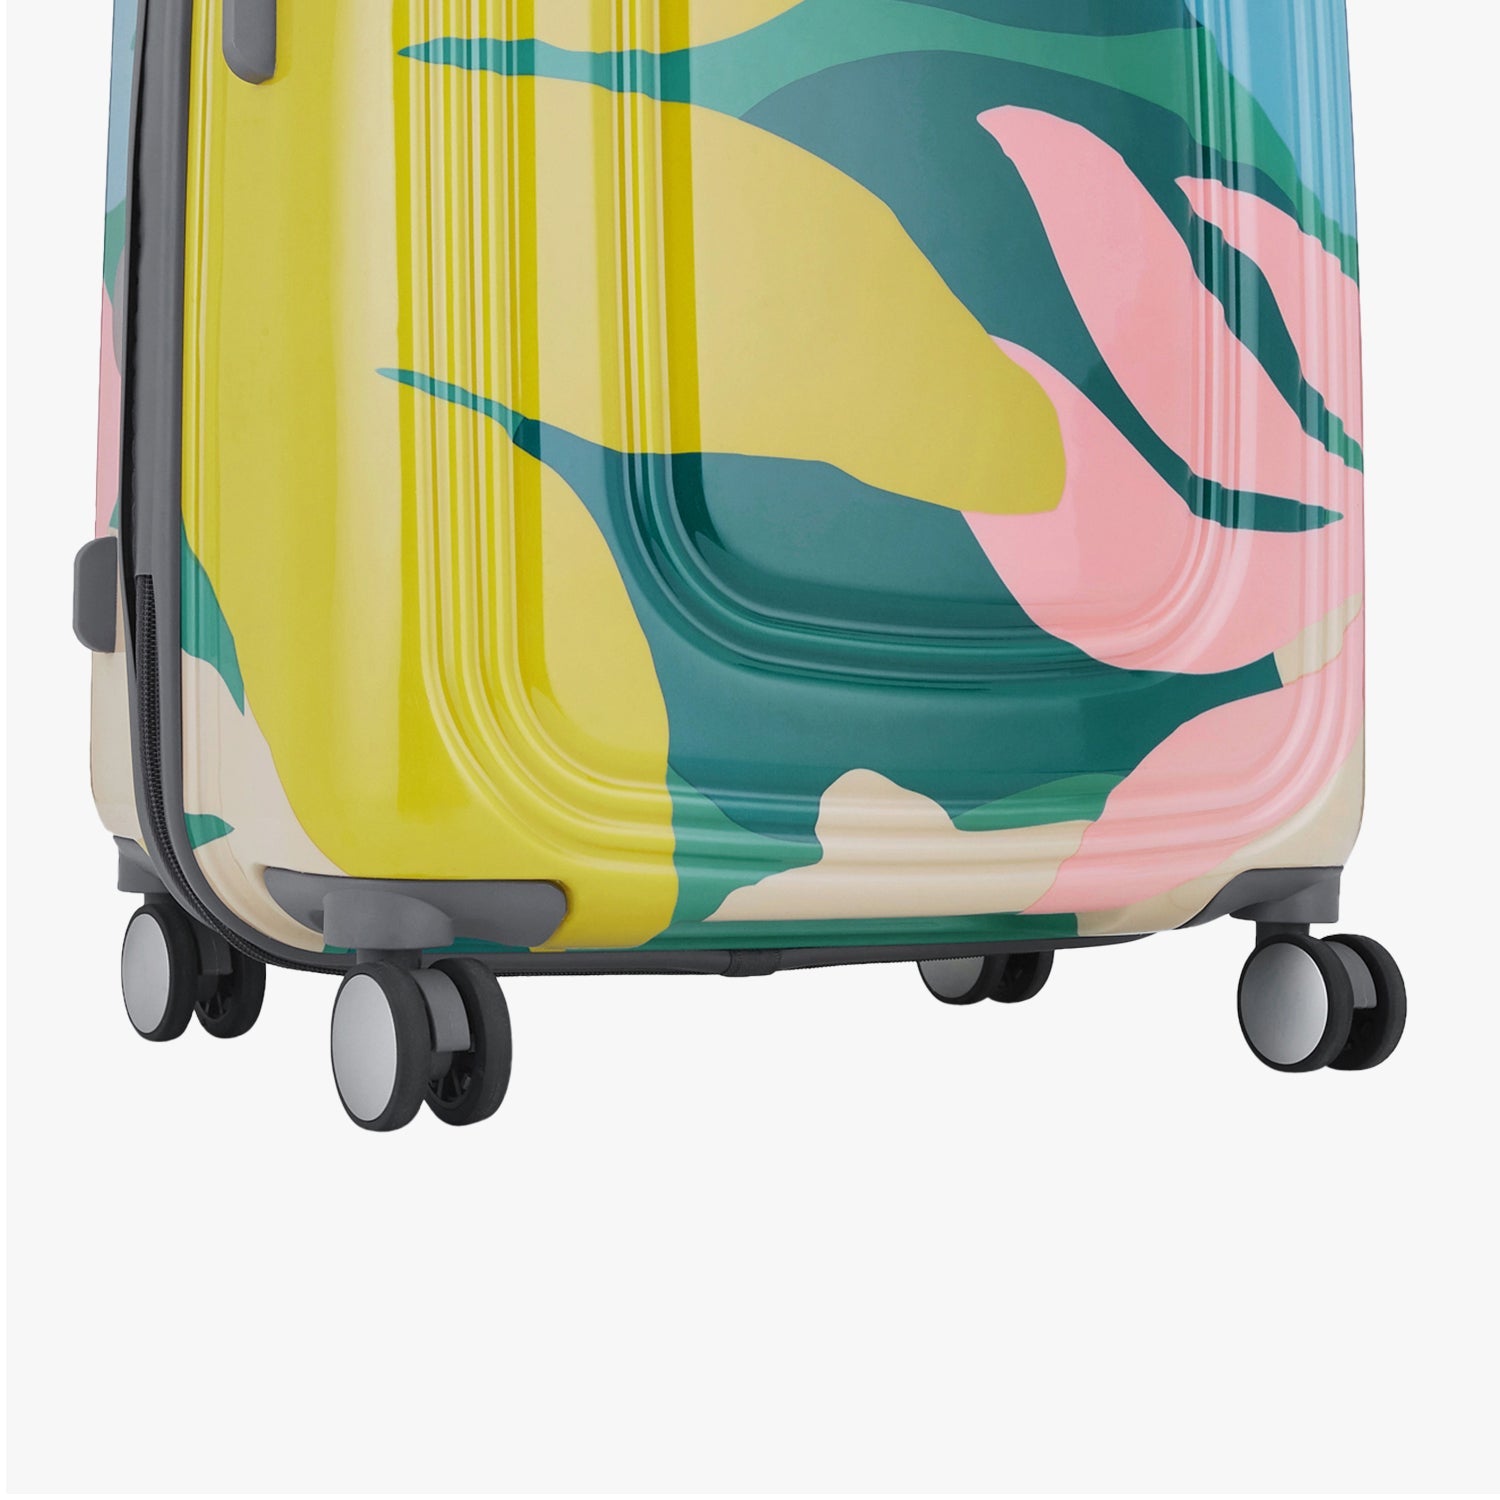 Florentine Hard Luggage - Cyan